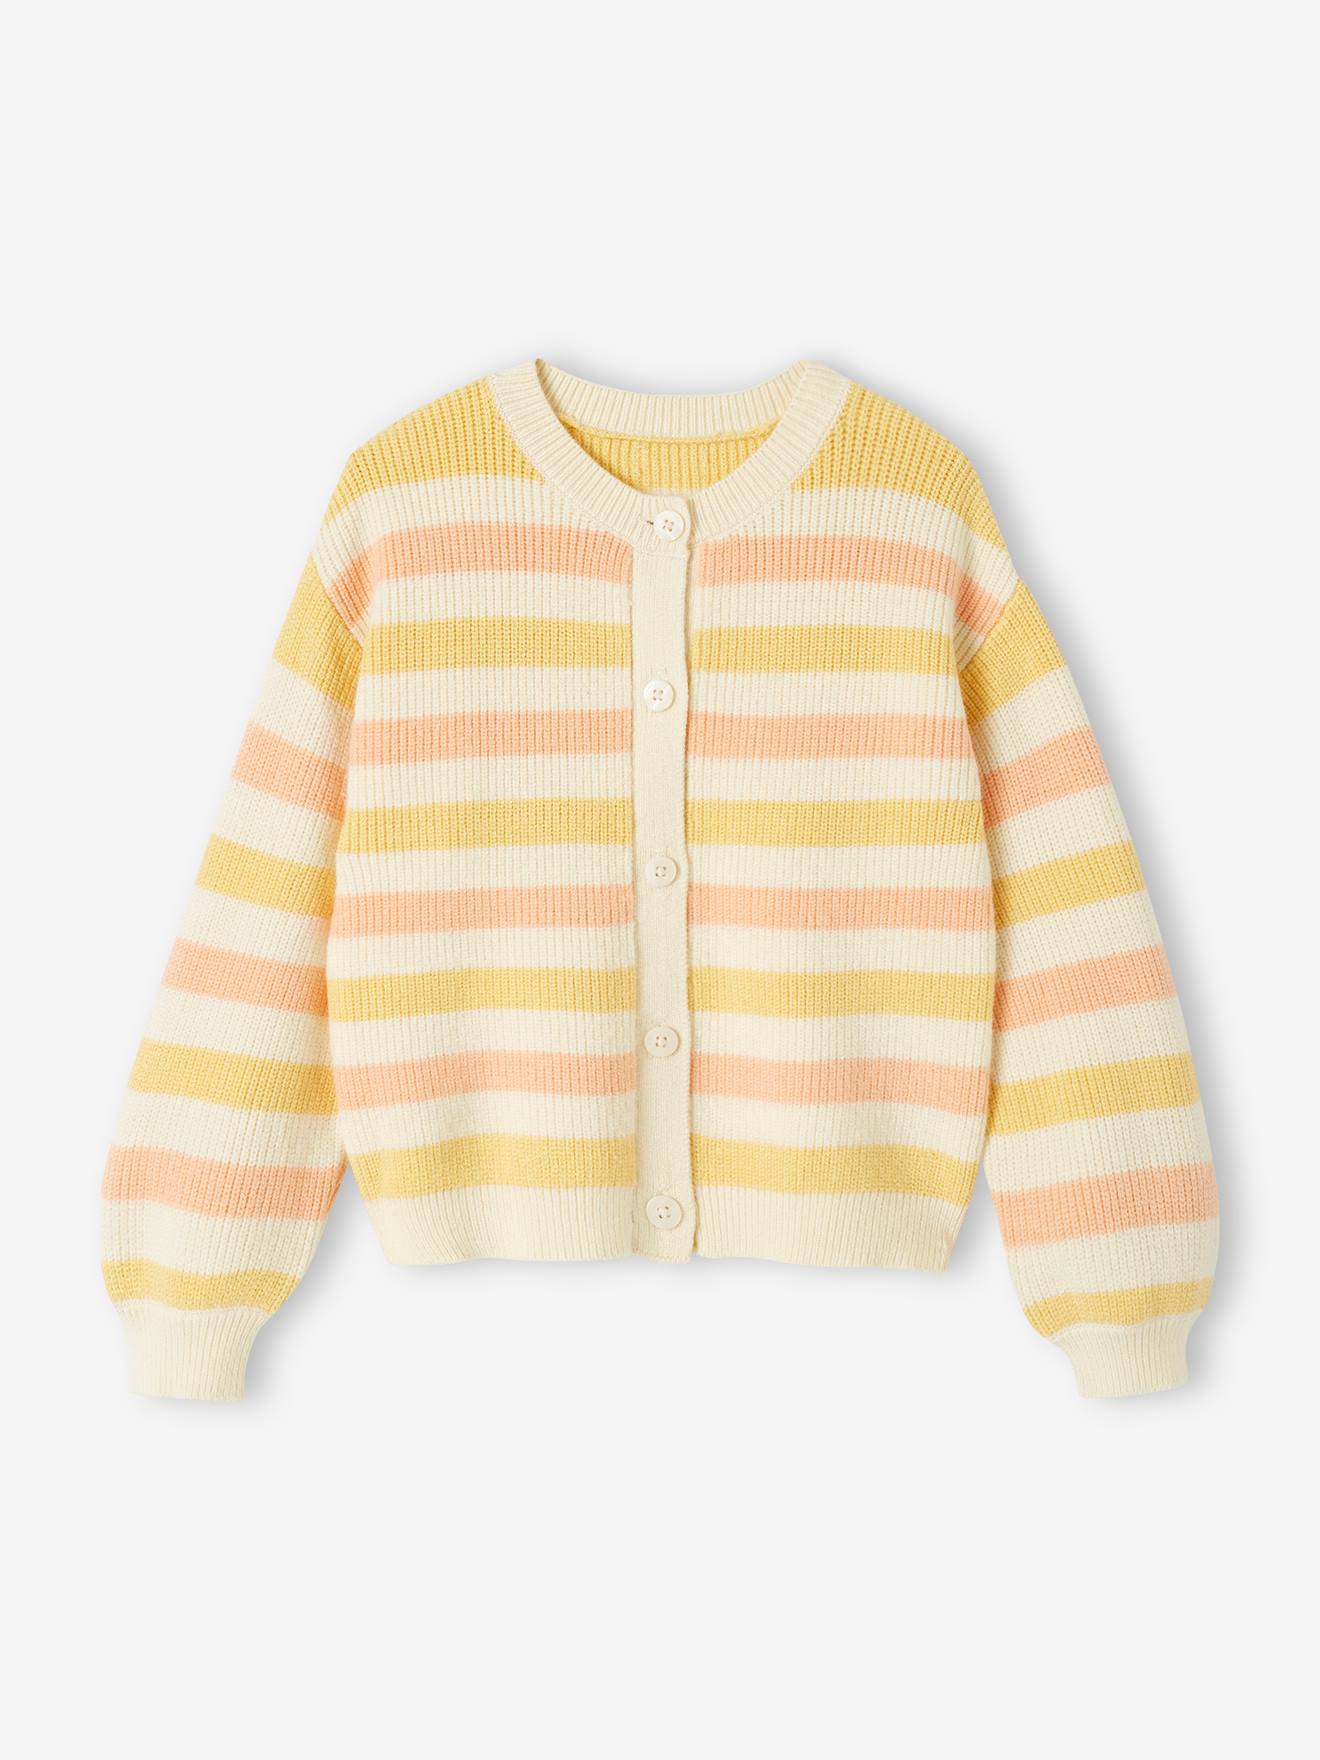 Striped Cardigan in Shimmery Rib Knit for Girls peach